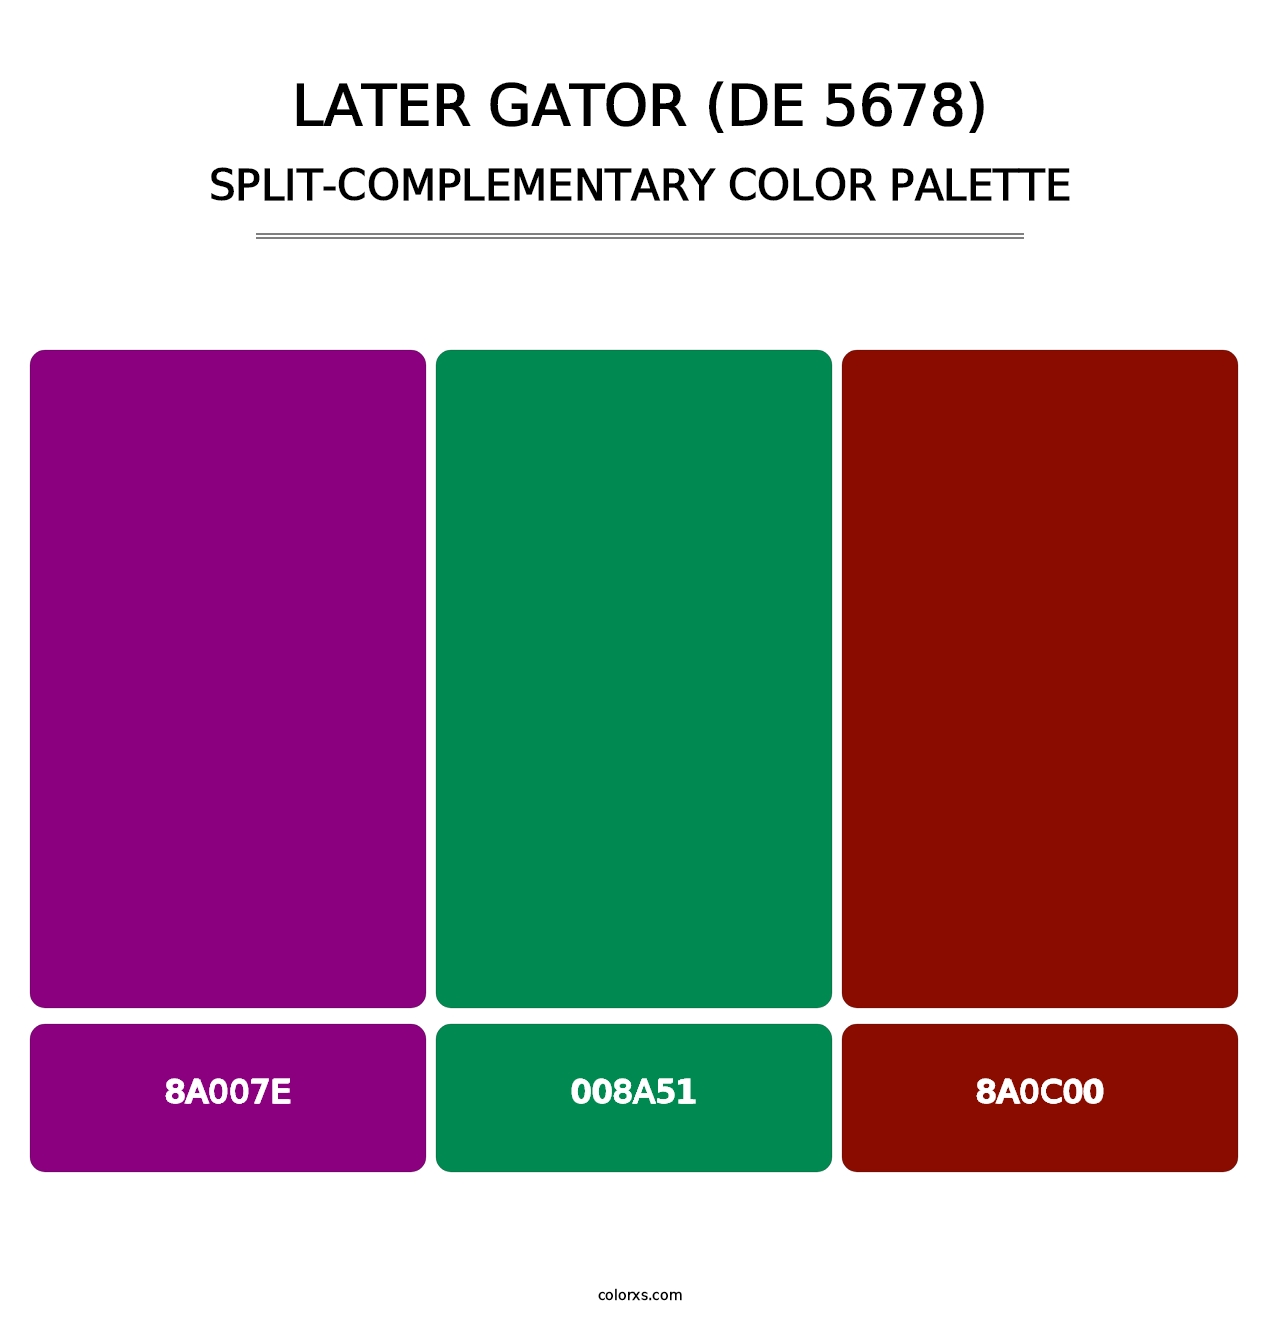 Later Gator (DE 5678) - Split-Complementary Color Palette